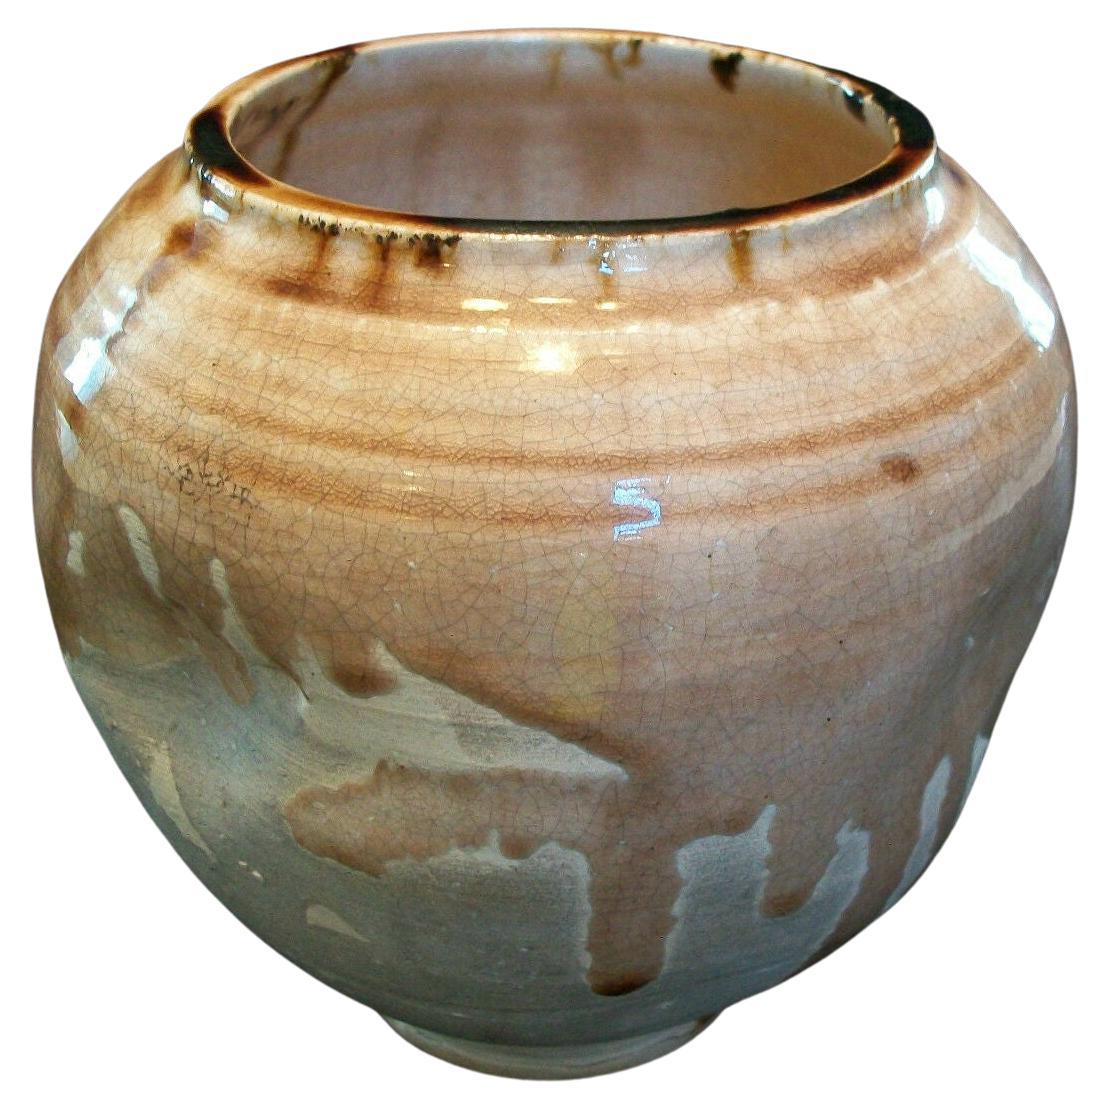 Vintage Glazed Ceramic Vase - Dimpled Sides - Unsigned - Late 20th Century For Sale